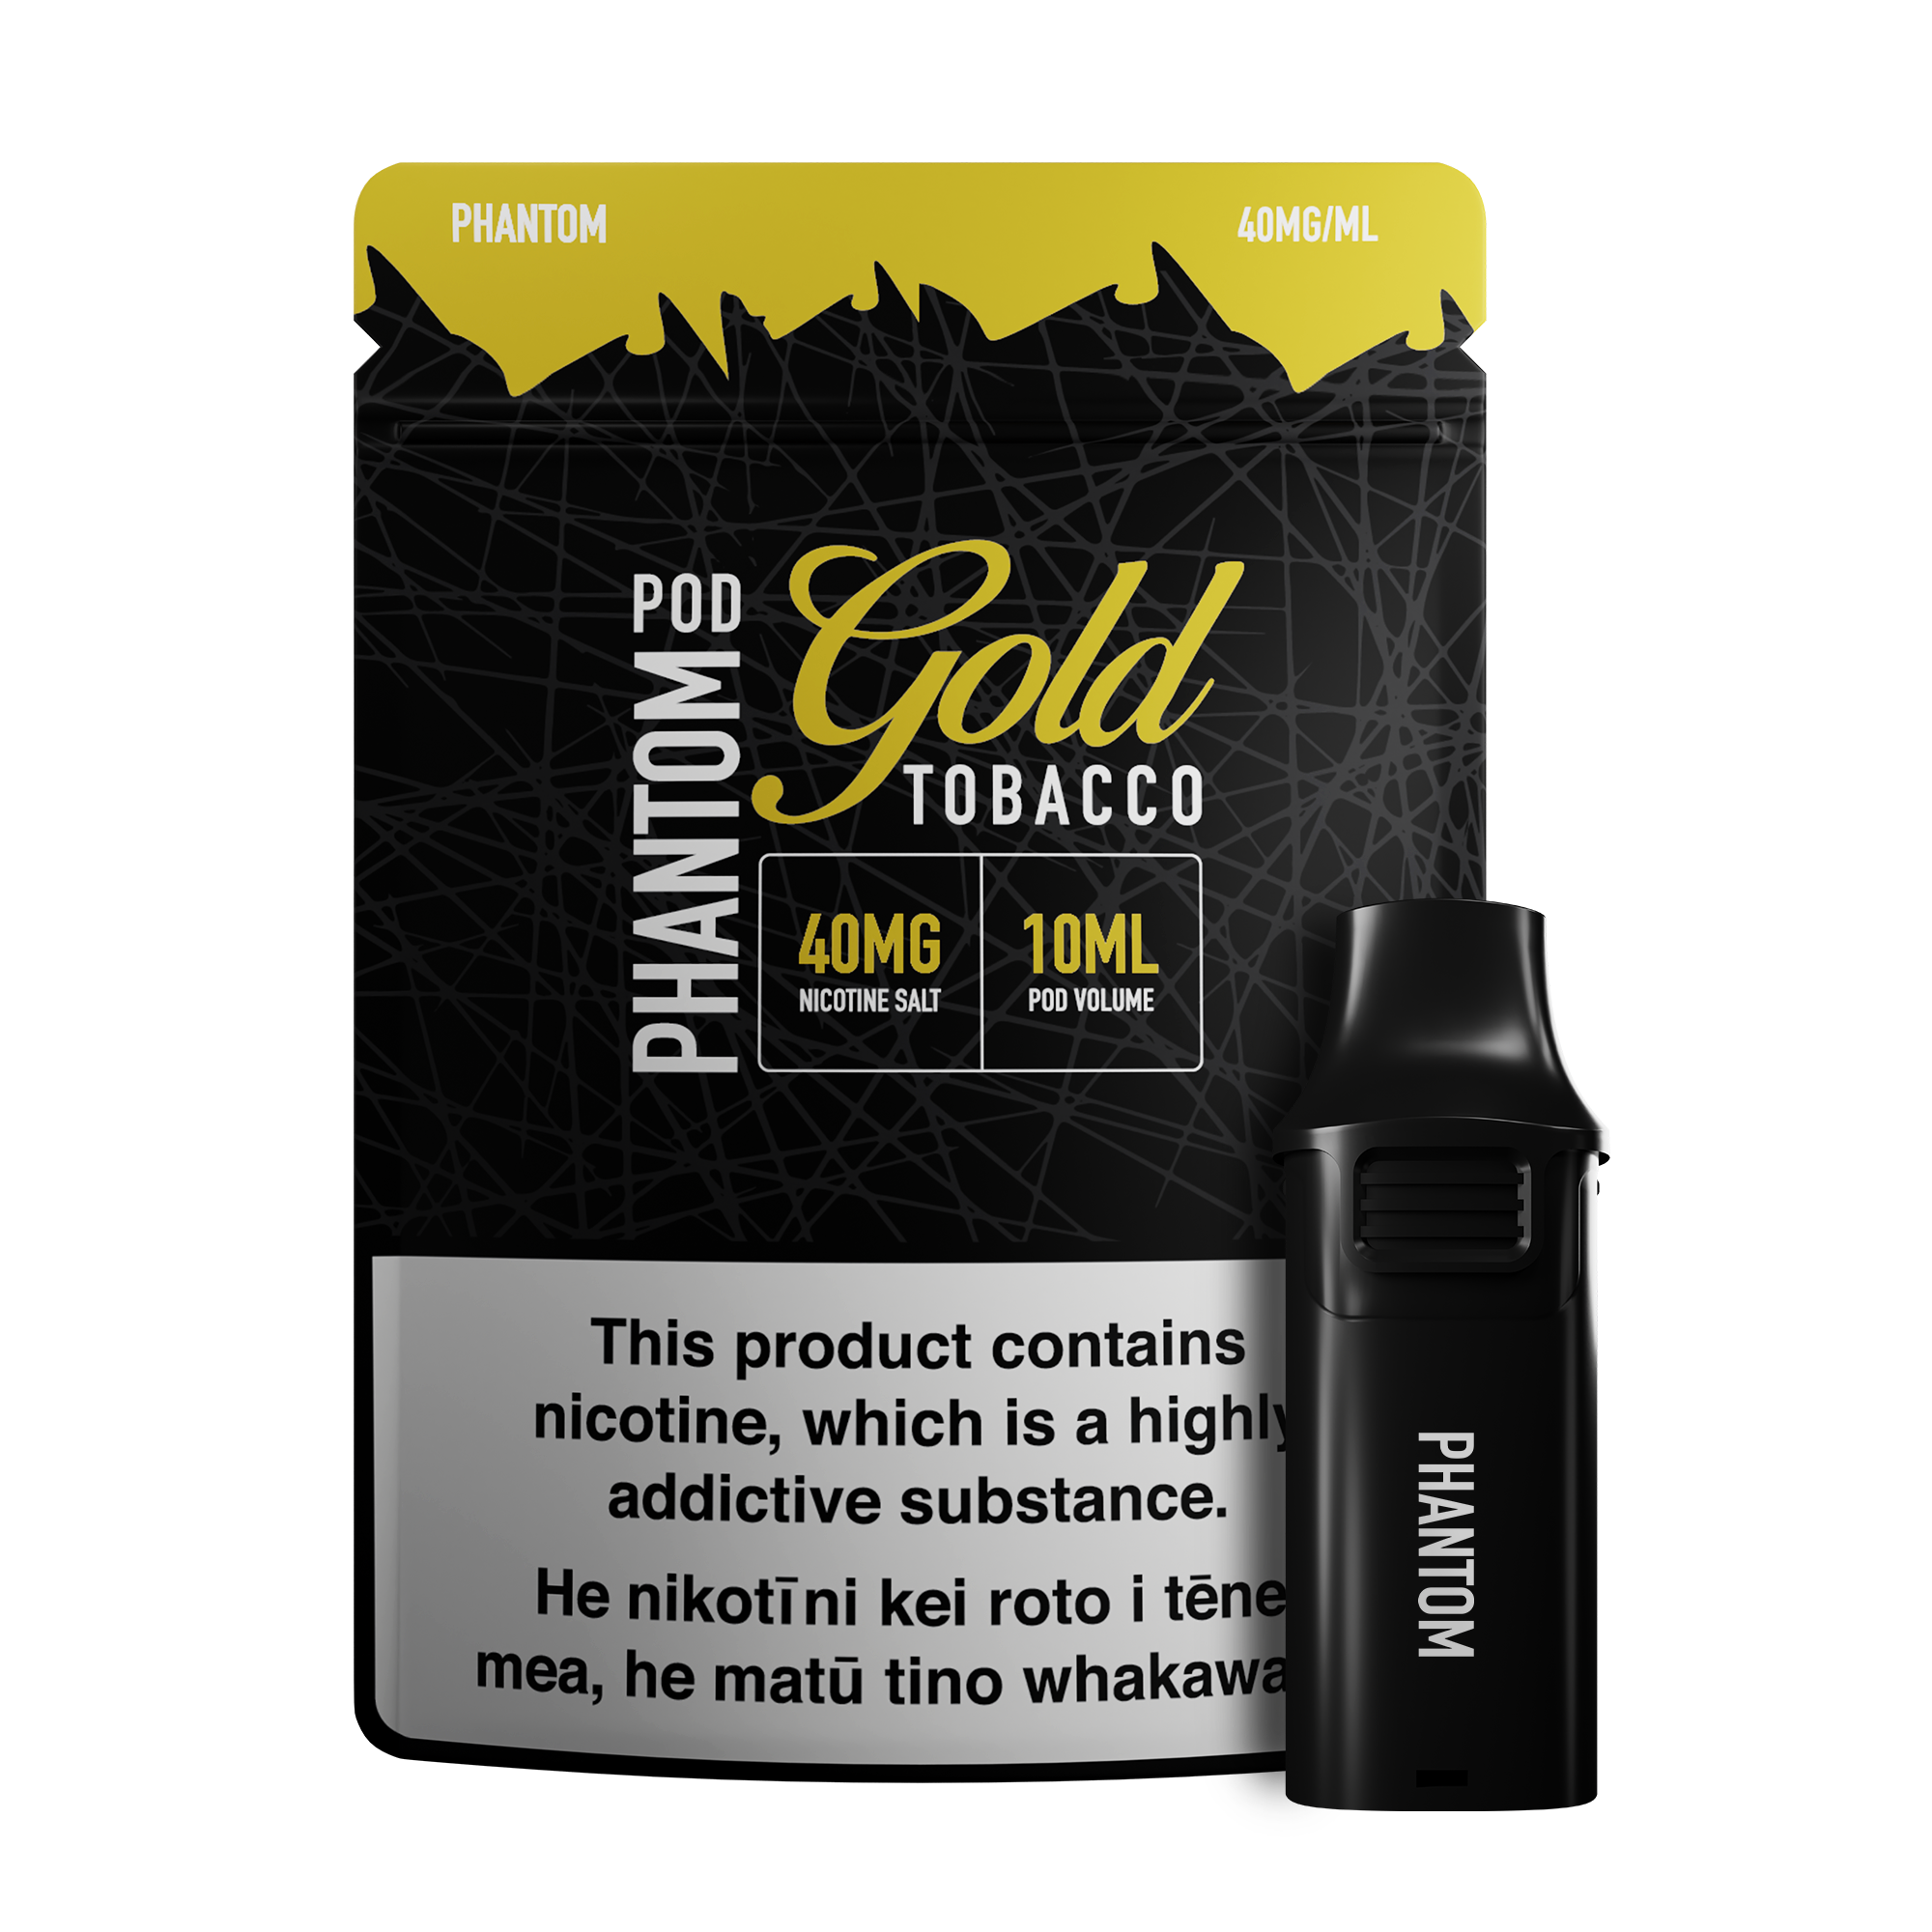 Phantom Gold Tobacco